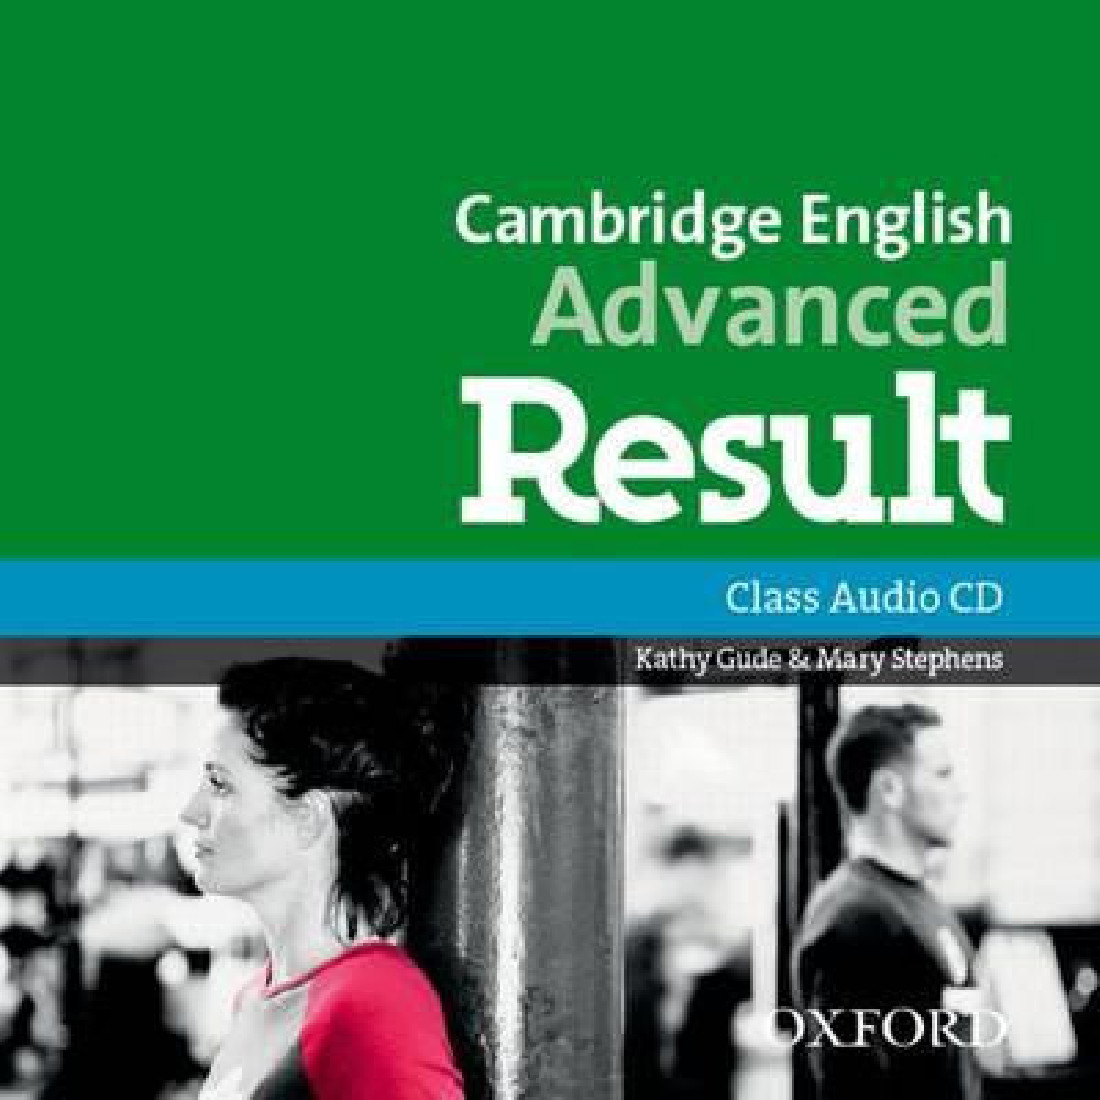 CAMBRIDGE ENGLISH ADVANCED RESULT CD CLASS N/E